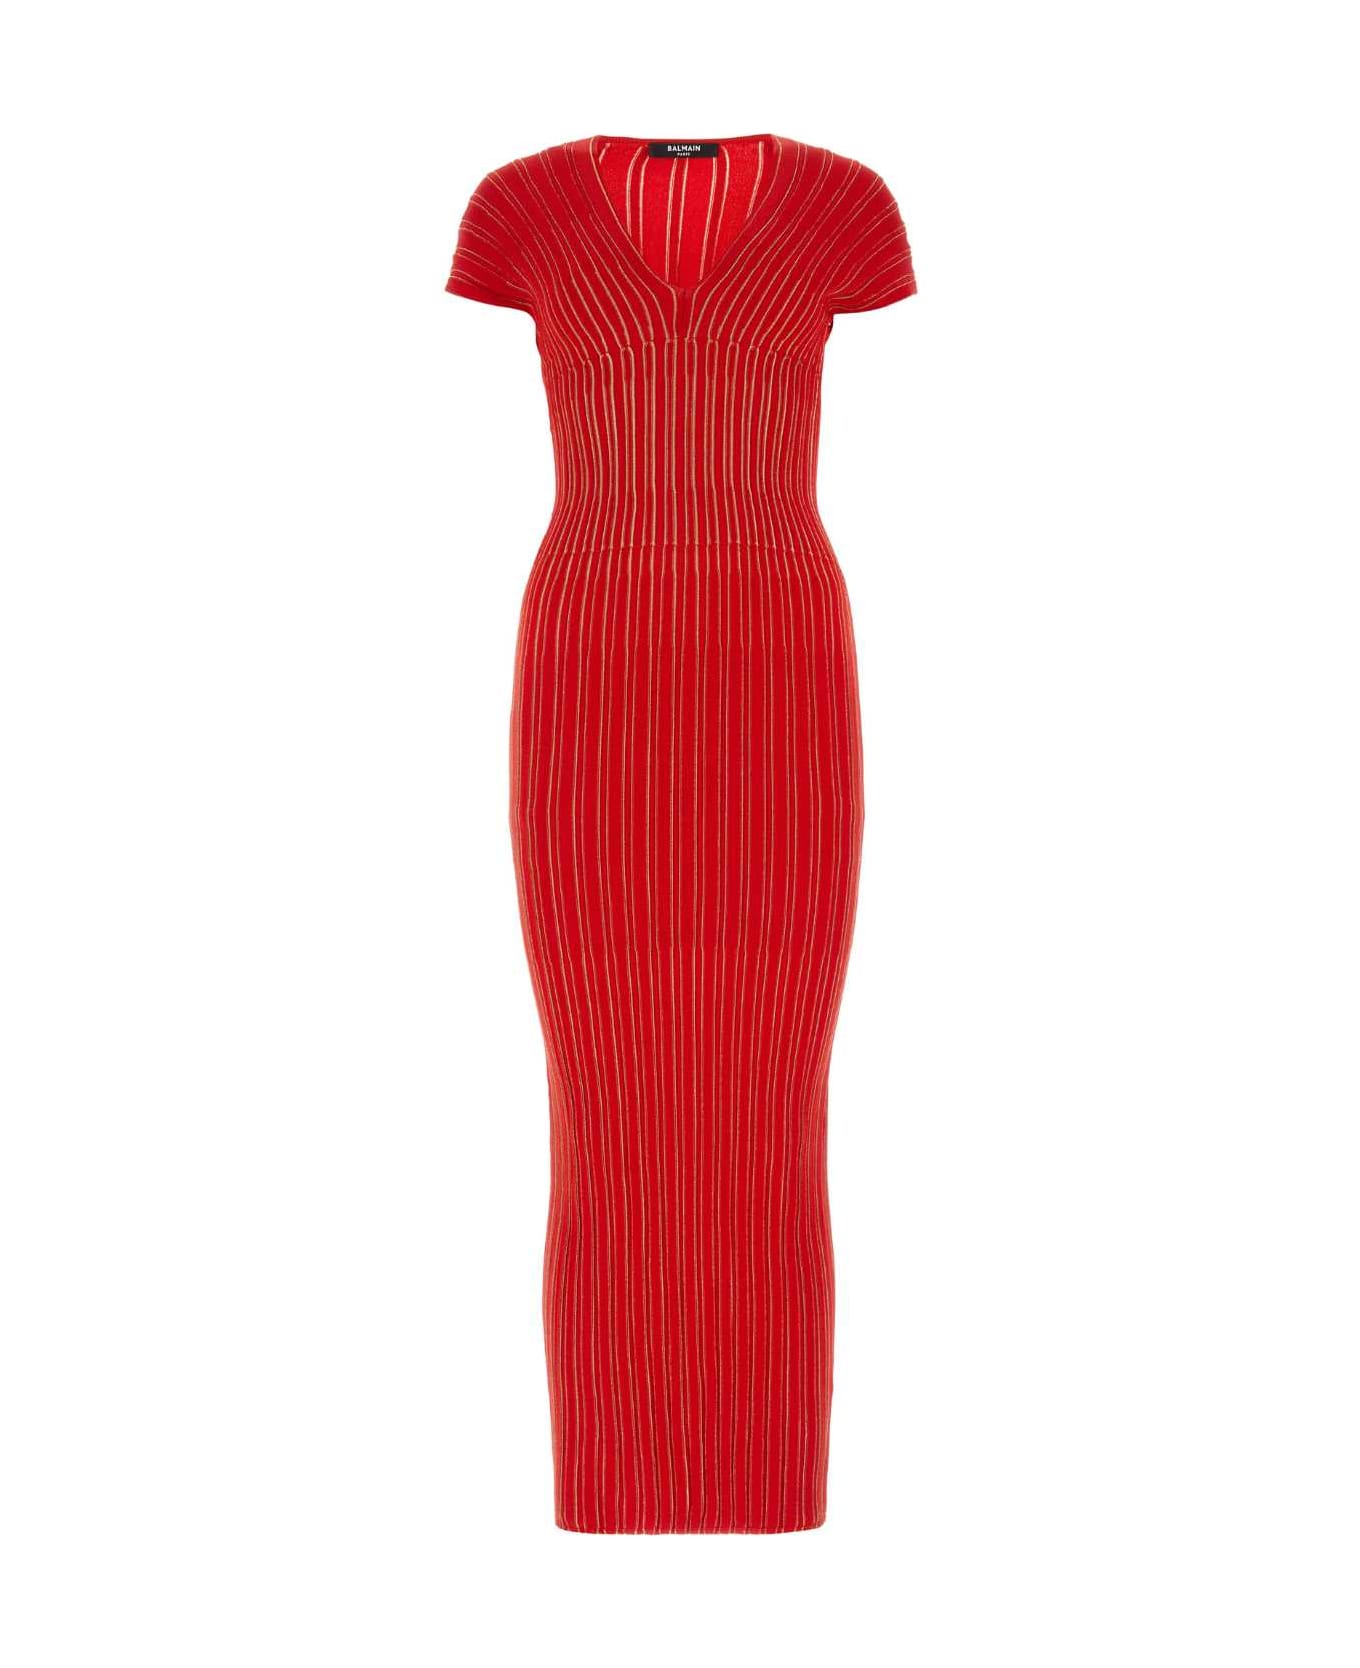 Balmain Red Stretch Viscose Blend Dress - MAG